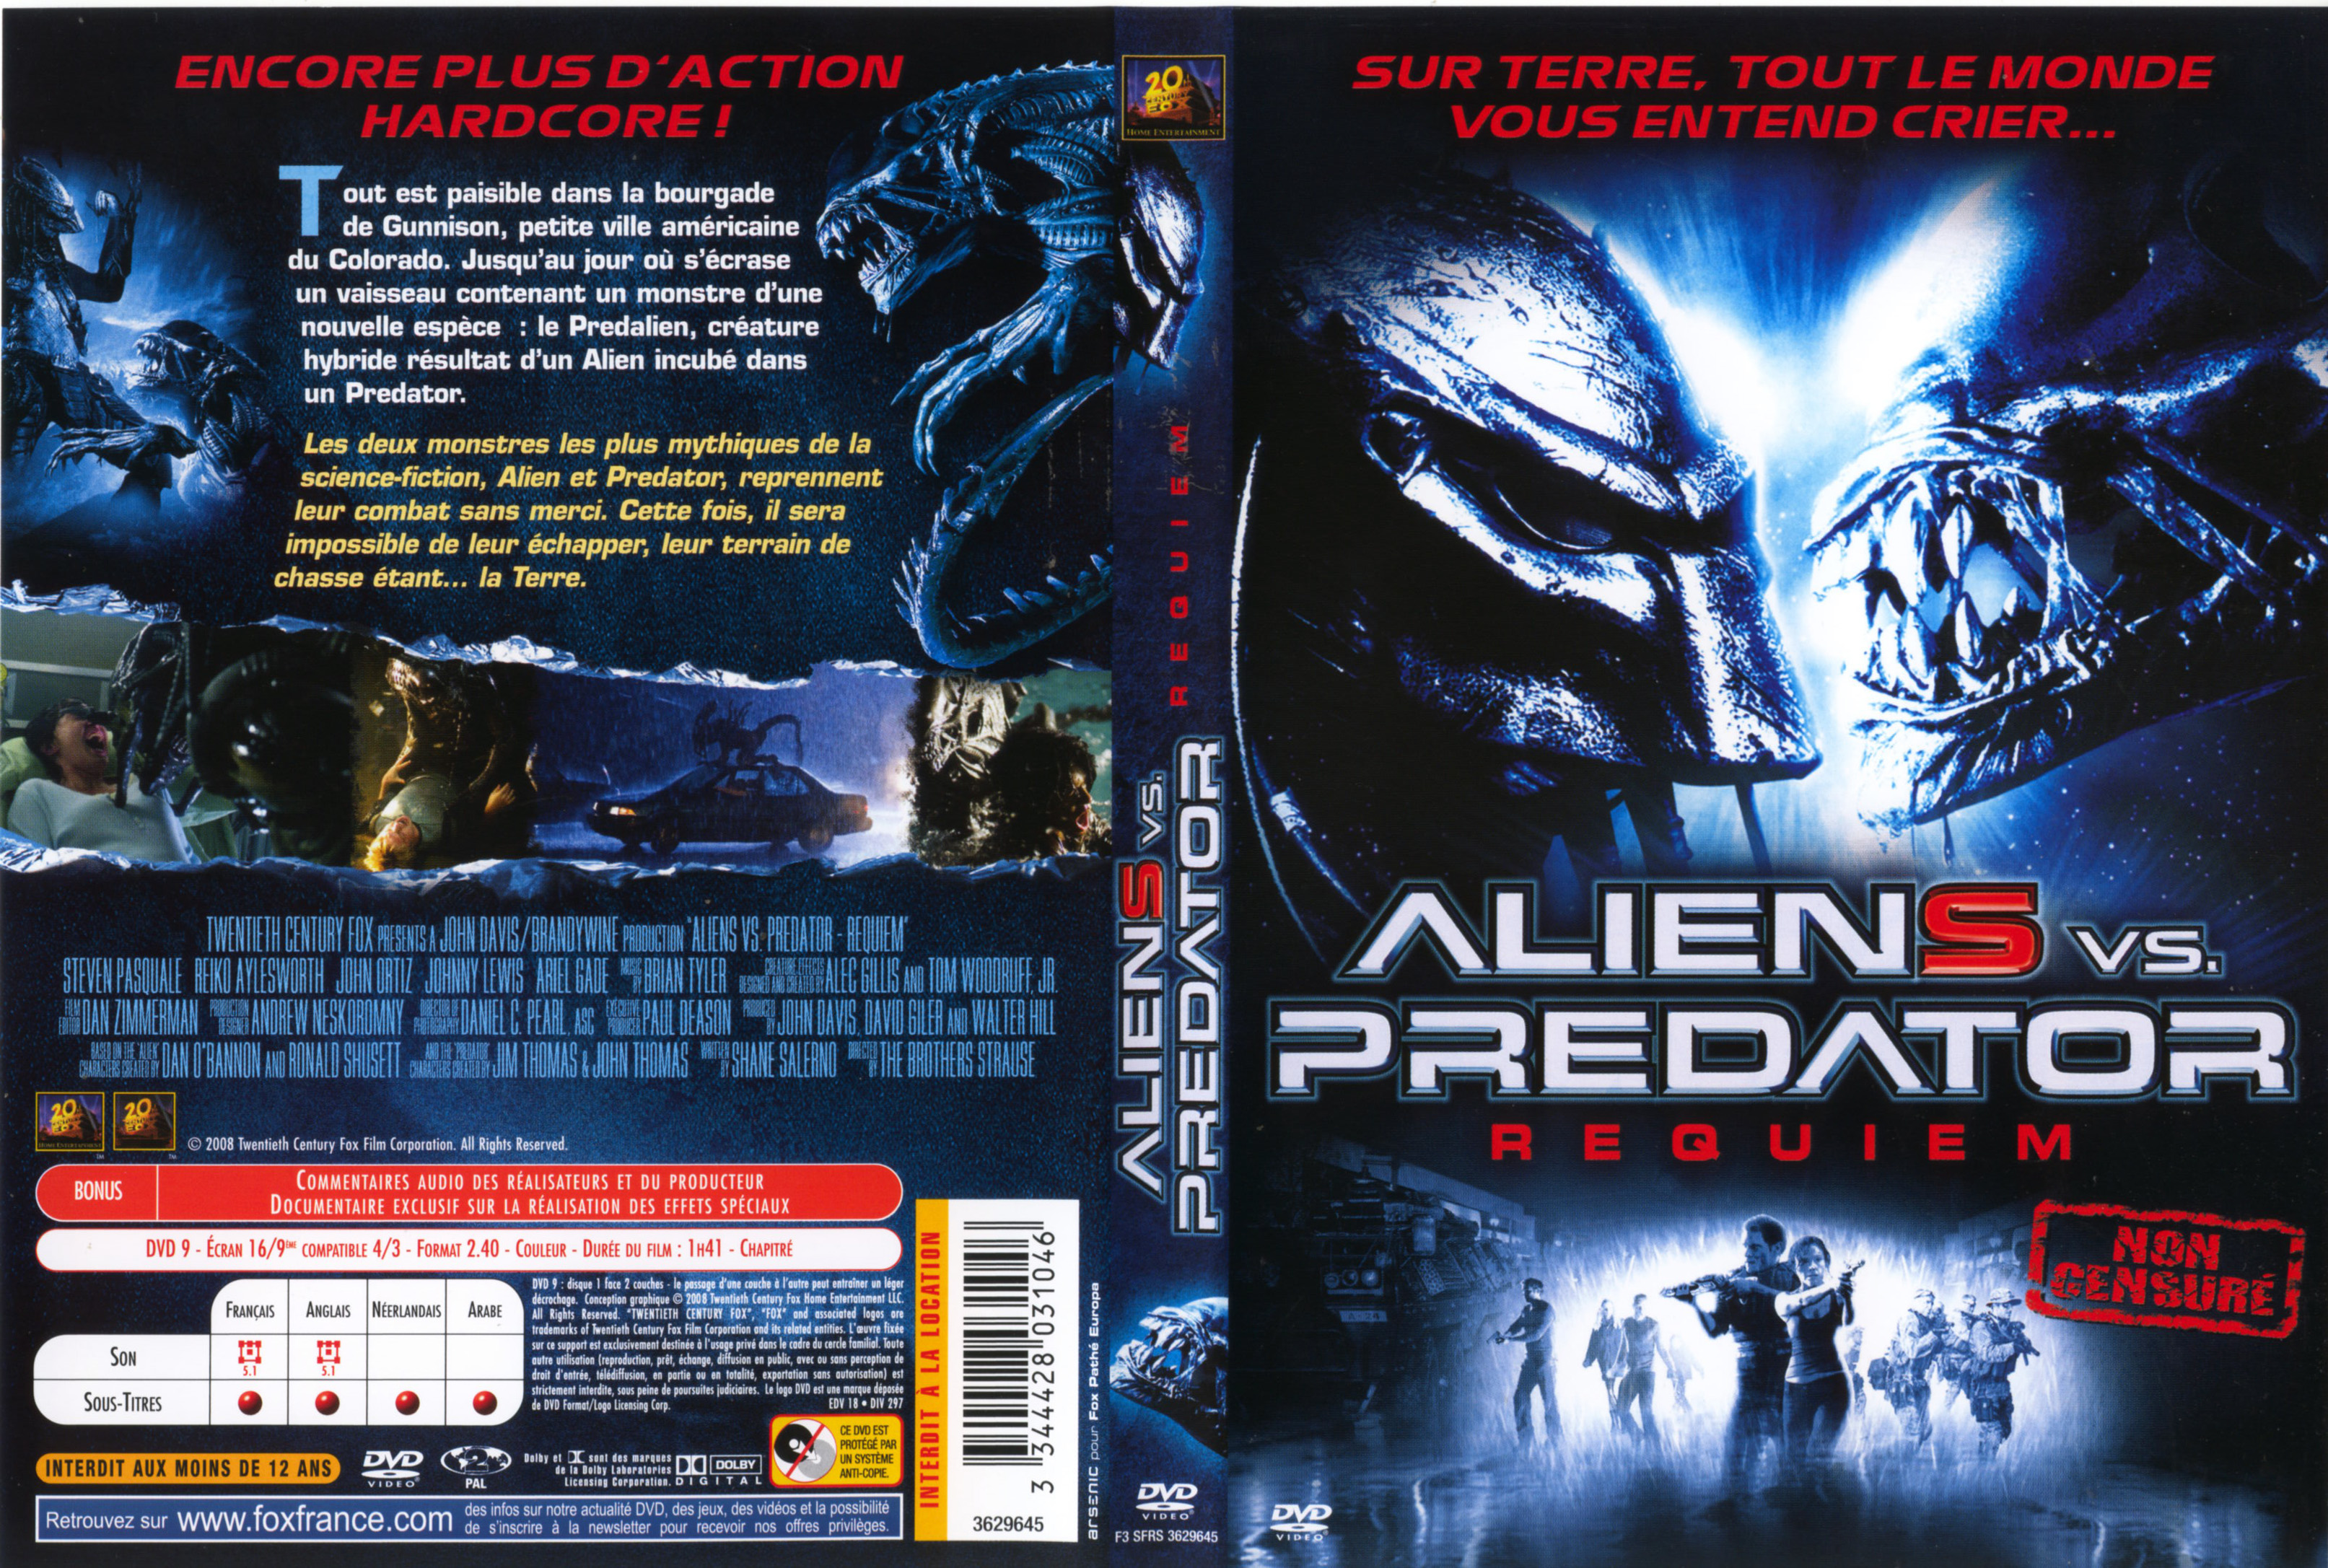 Jaquette DVD Aliens vs Predator Requiem v2